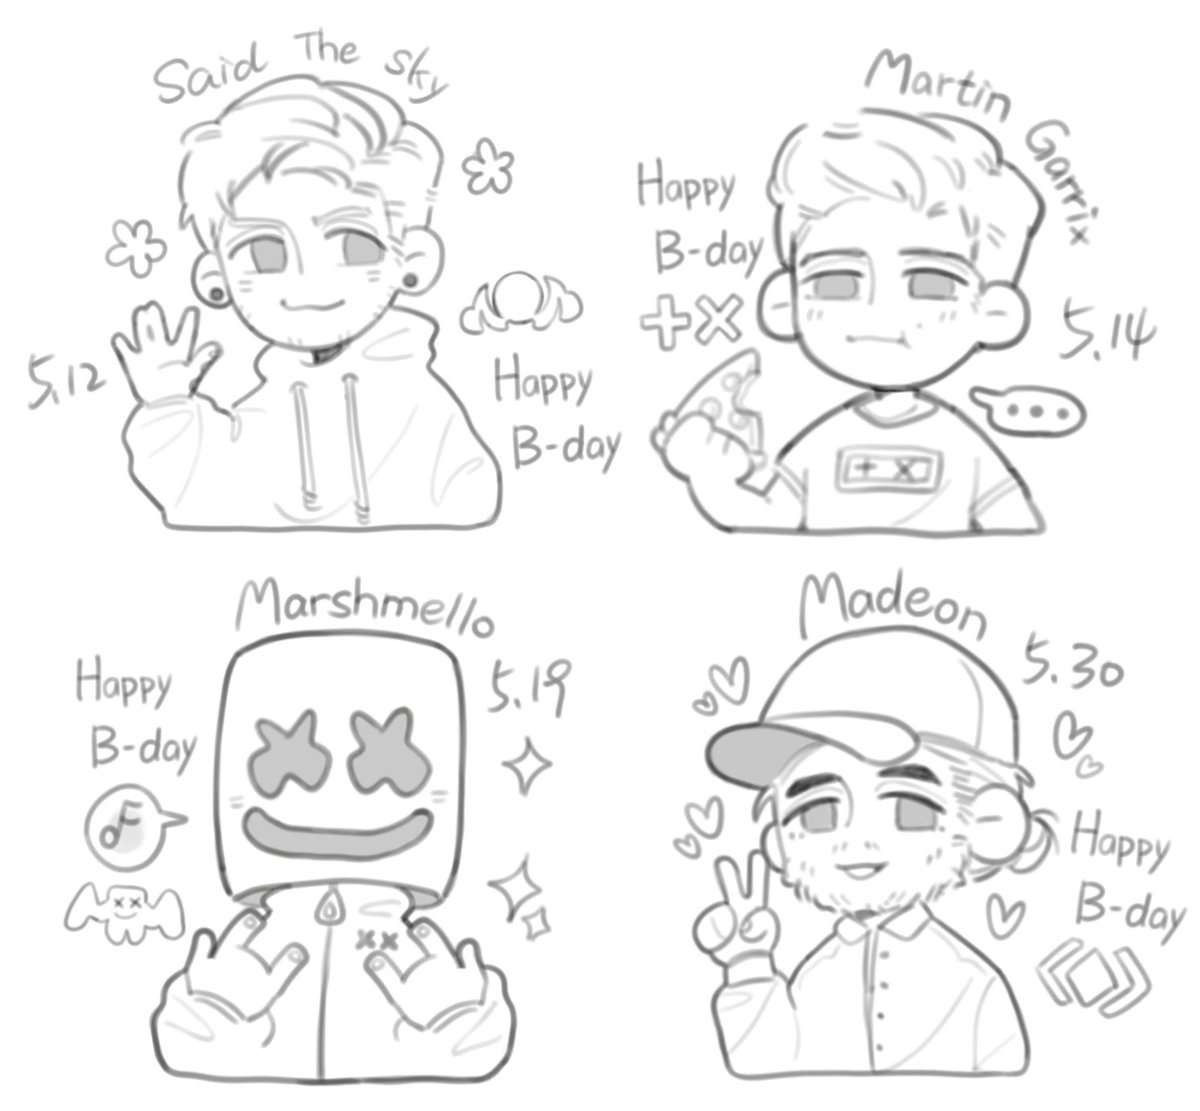 MAY📆
提前祝宝宝们生日快乐🥺❤️🍰
HBD in MAY!!!!!!!!!!🔥🔥✨
#saidthesky #MartinGarrix 
#Marshmello #Madeon